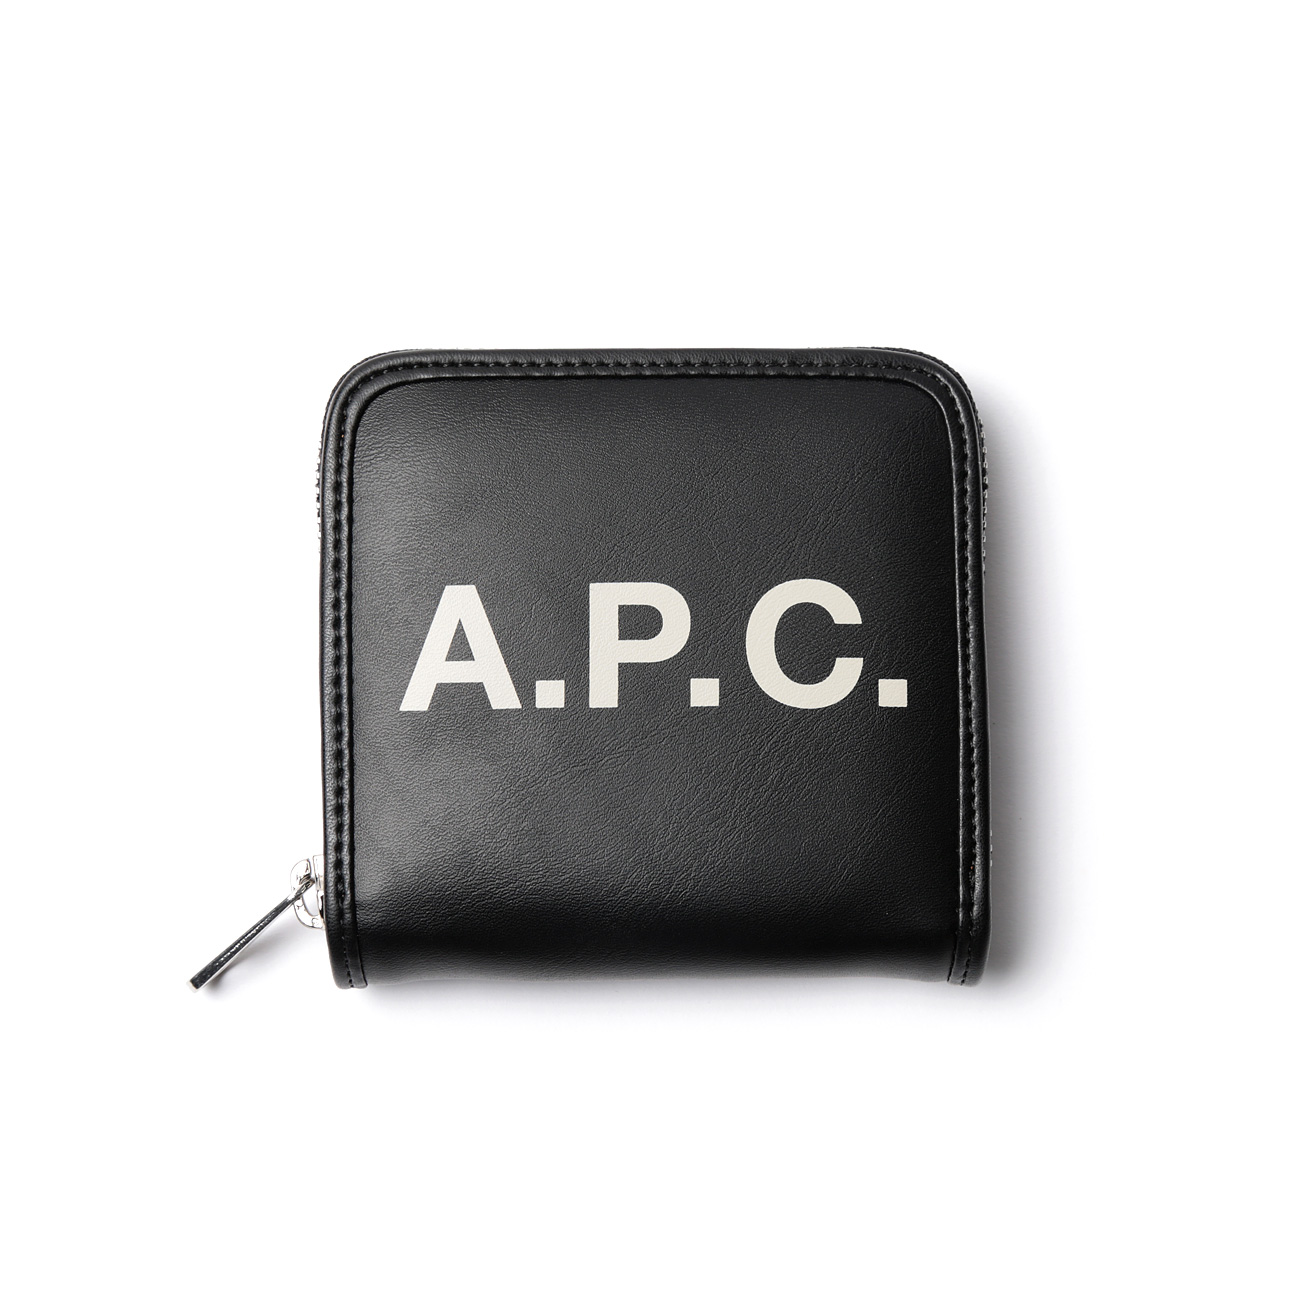 A.P.C.人気の二つ折り財布 種類別レビュー | COLLECT STORE BLOG